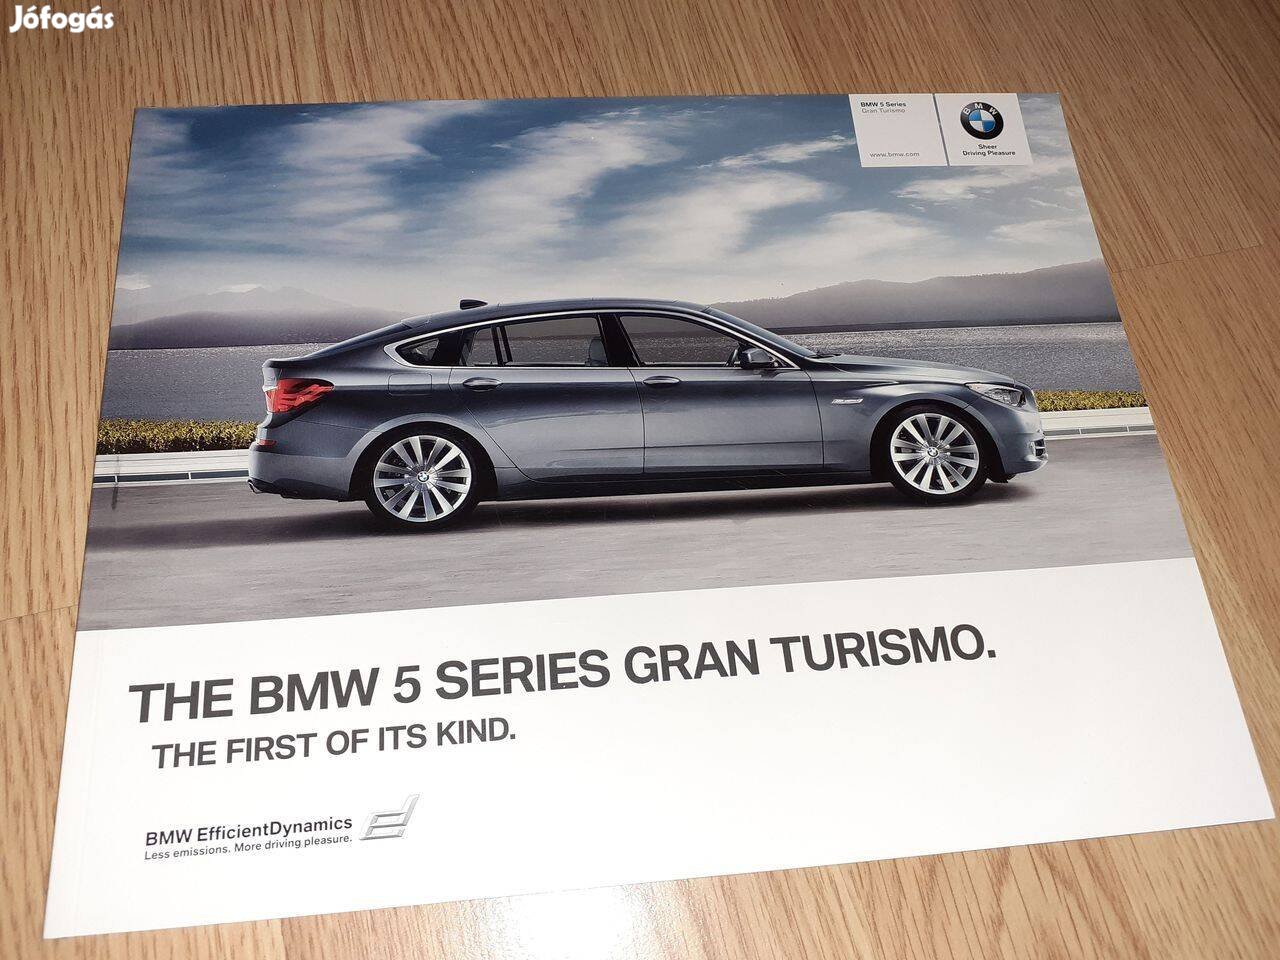 BMW 5 Gran Turismo prospektus - 2010, angol nyelvű